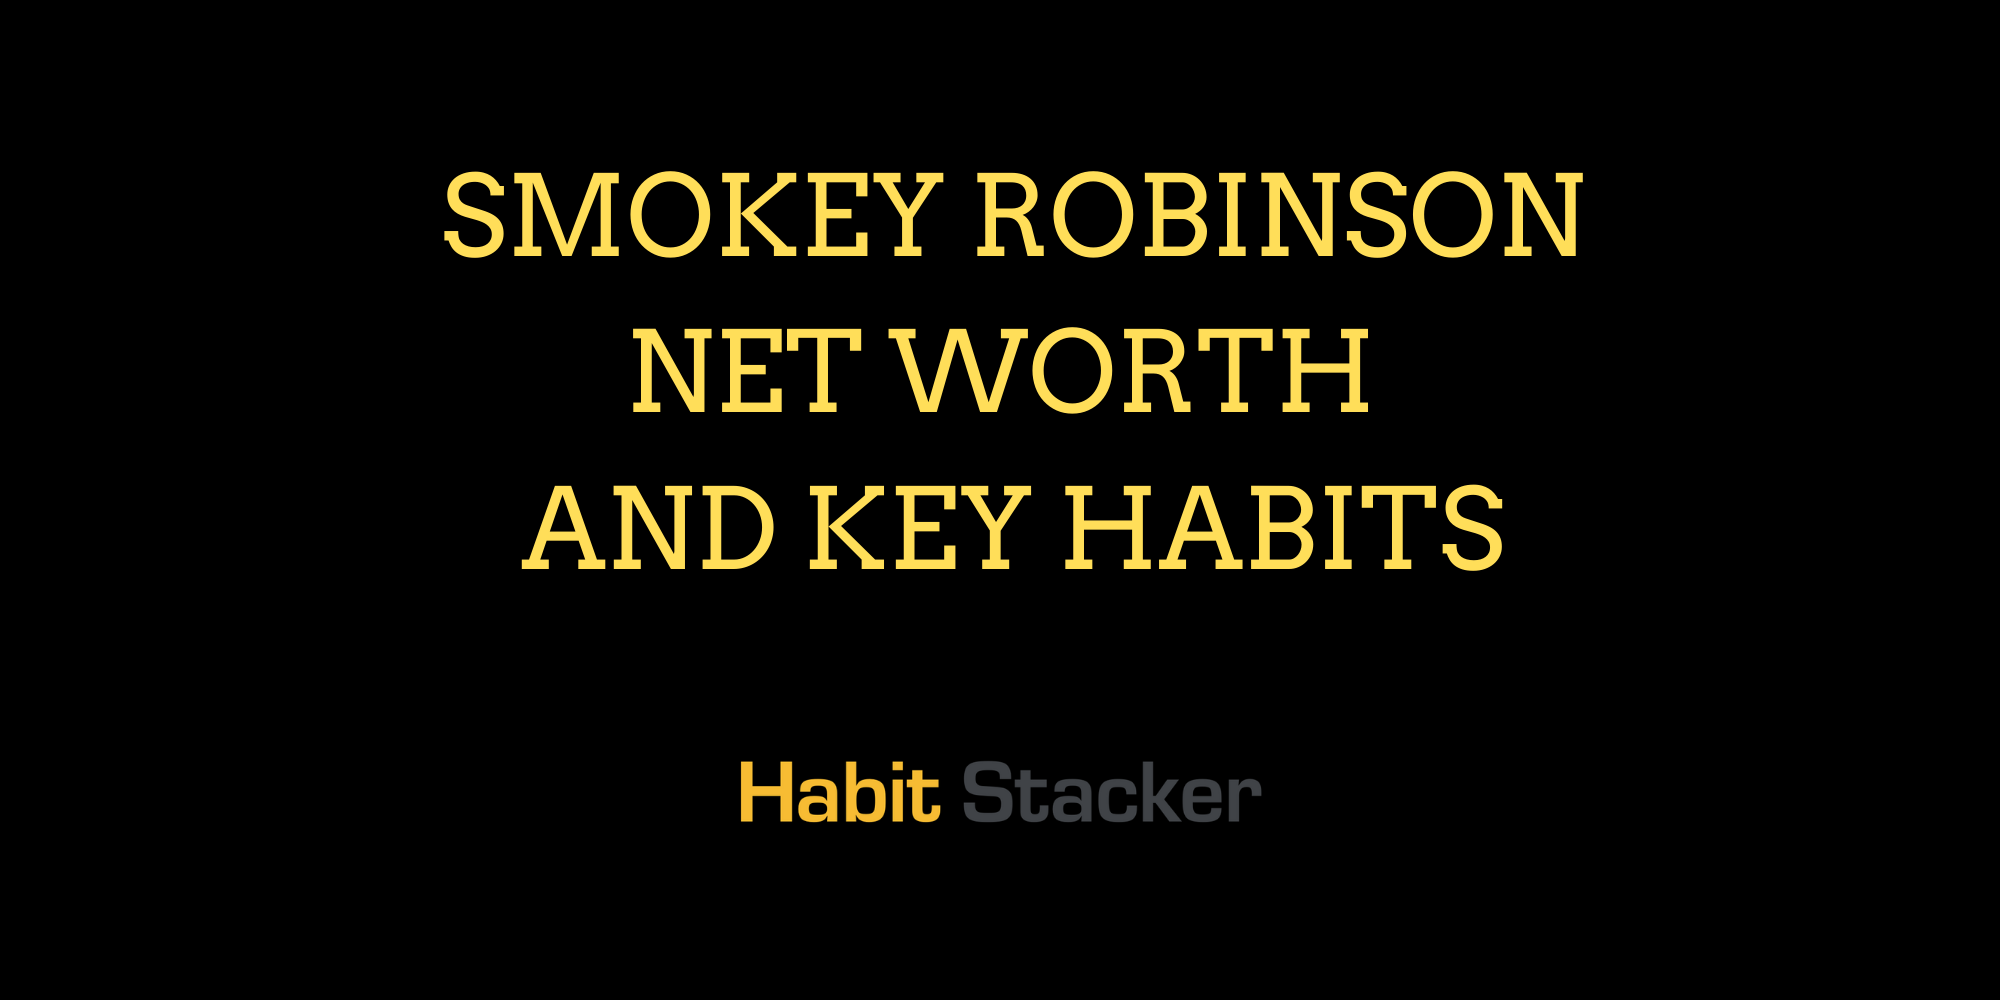 Smokey Robinson Net Worth